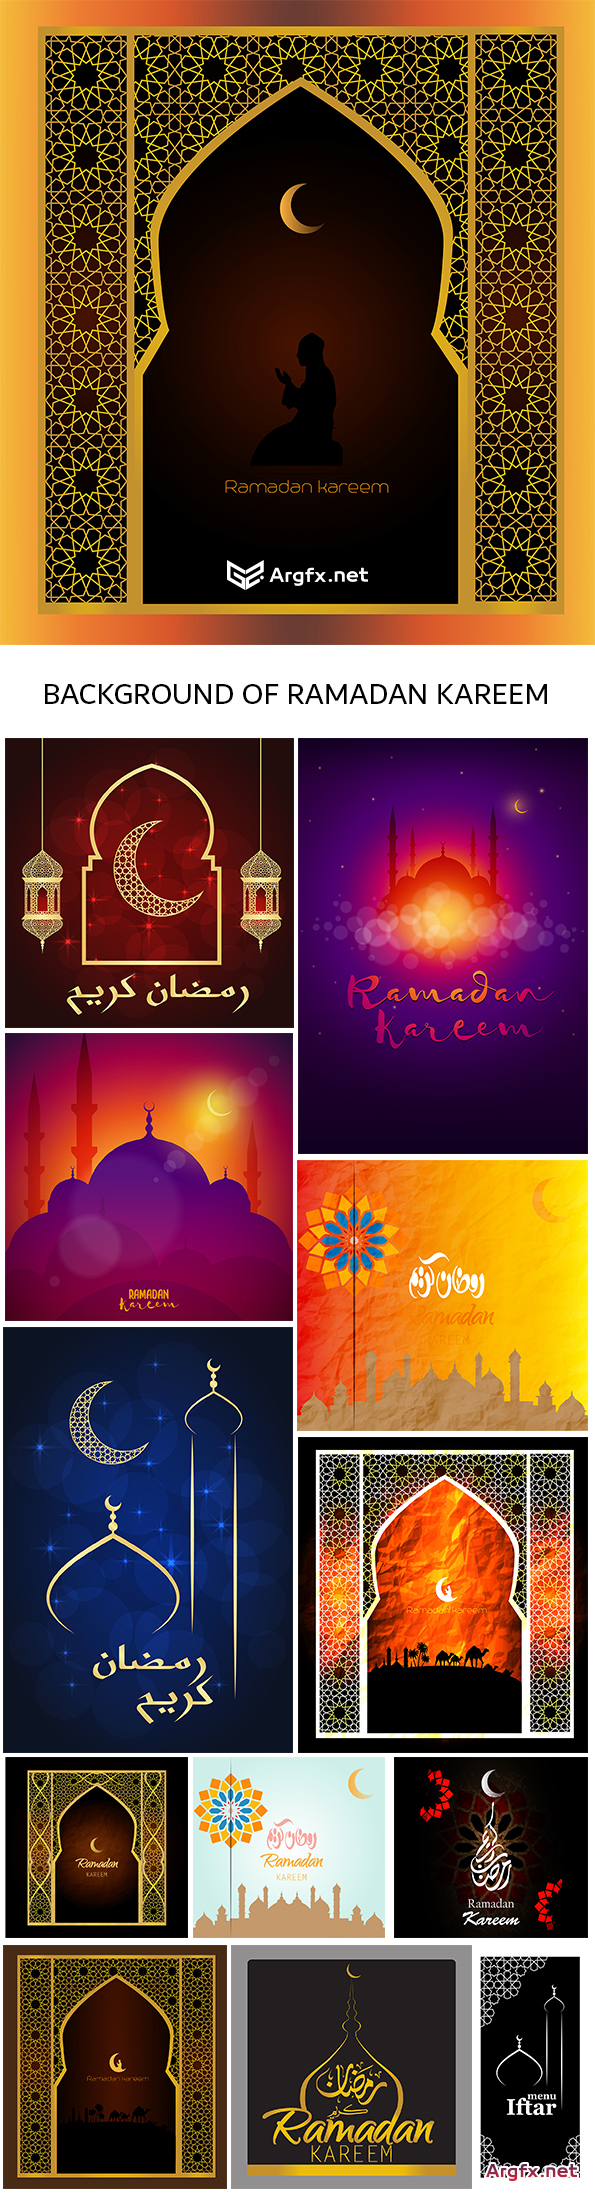 Background of Ramadan Kareem